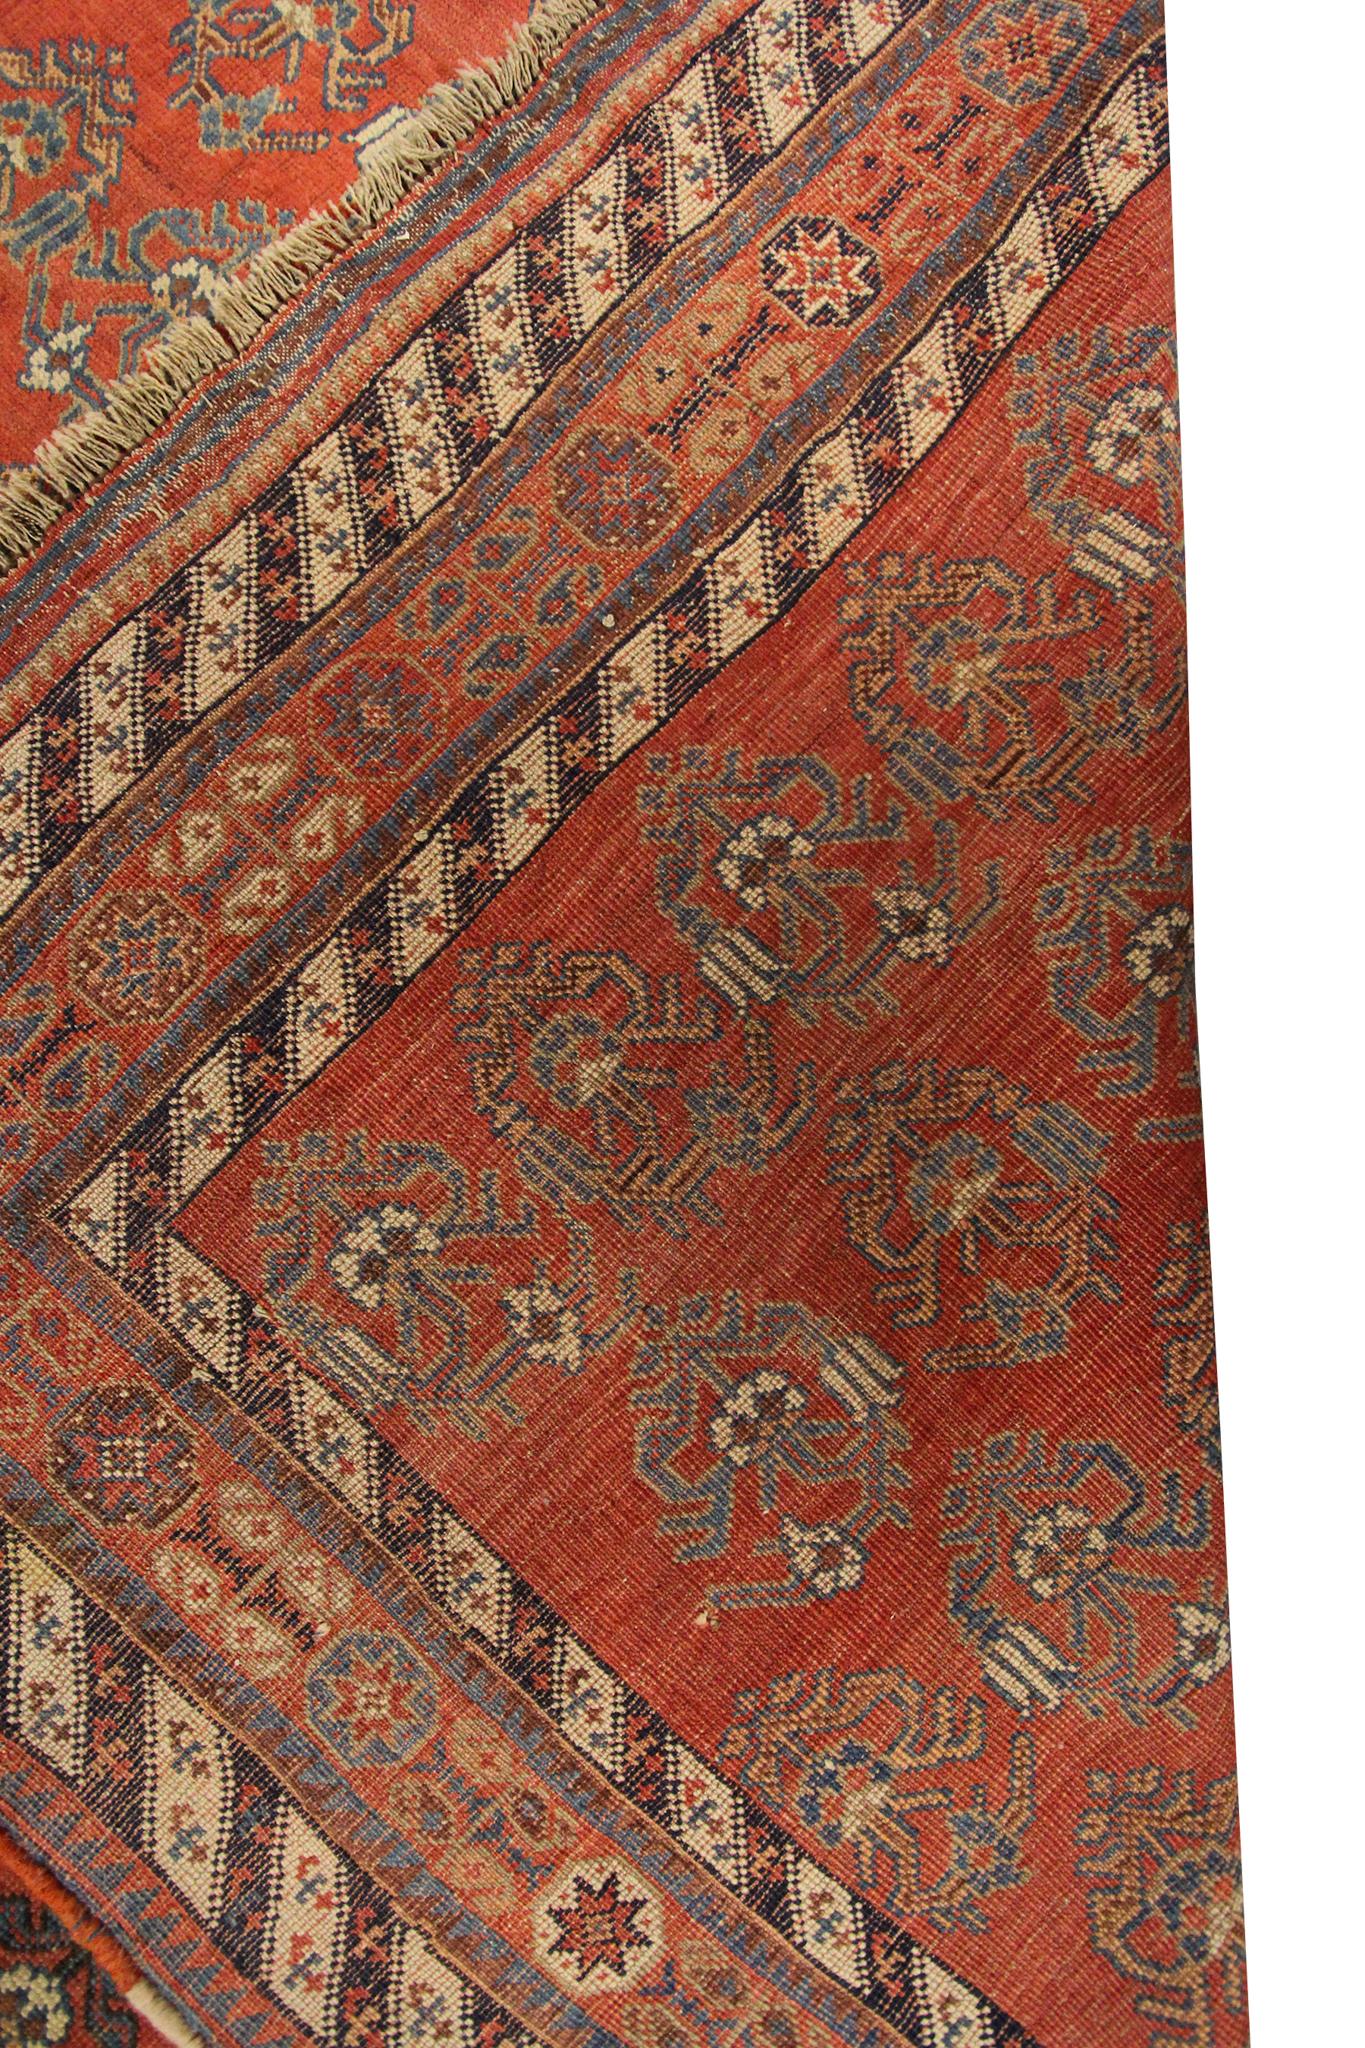 1880 Antique Afshar Rug Persian Rug Geometric Wool Foundation 7x12 206cmx376cm For Sale 3